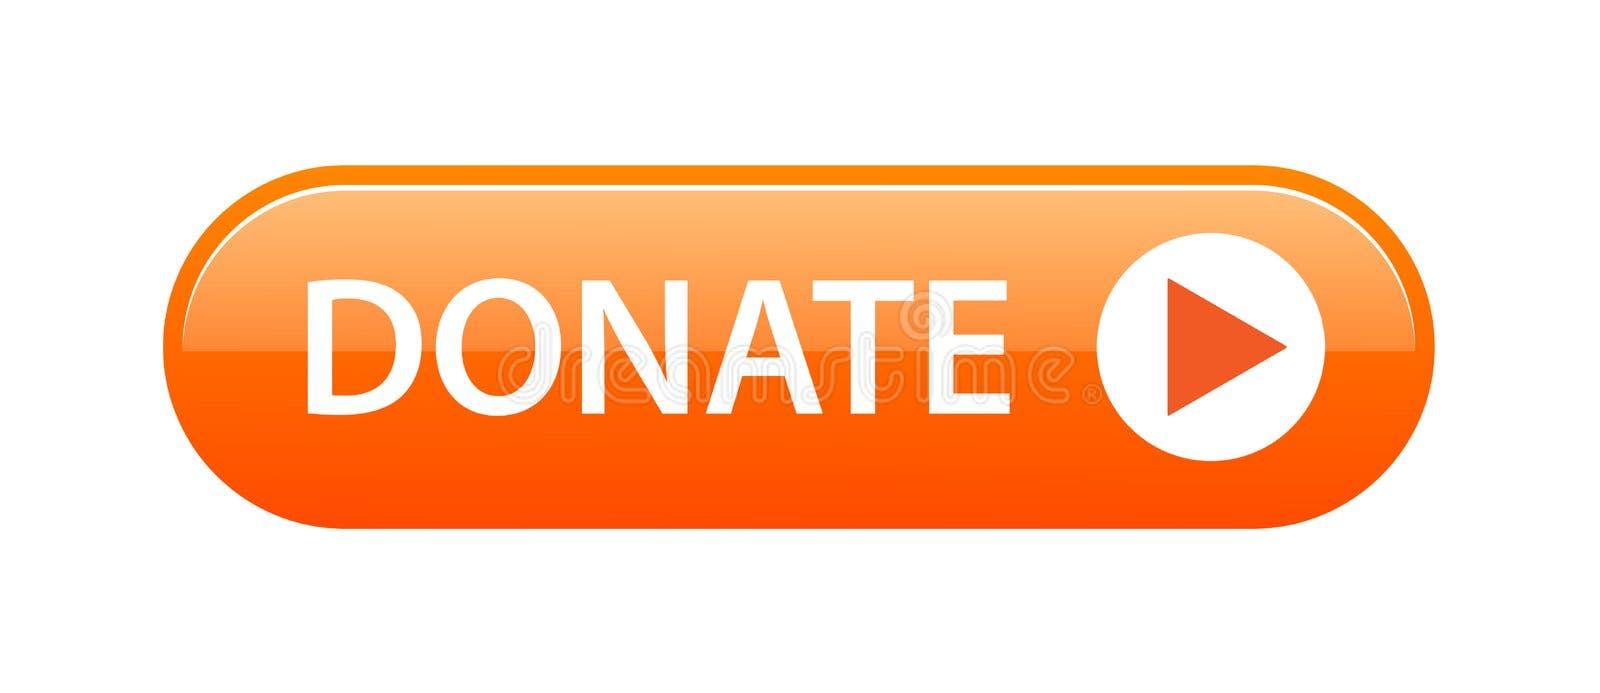 Donate Button Orange Stock Illustrations, Cliparts and Royalty Free Donate  Button Orange Vectors